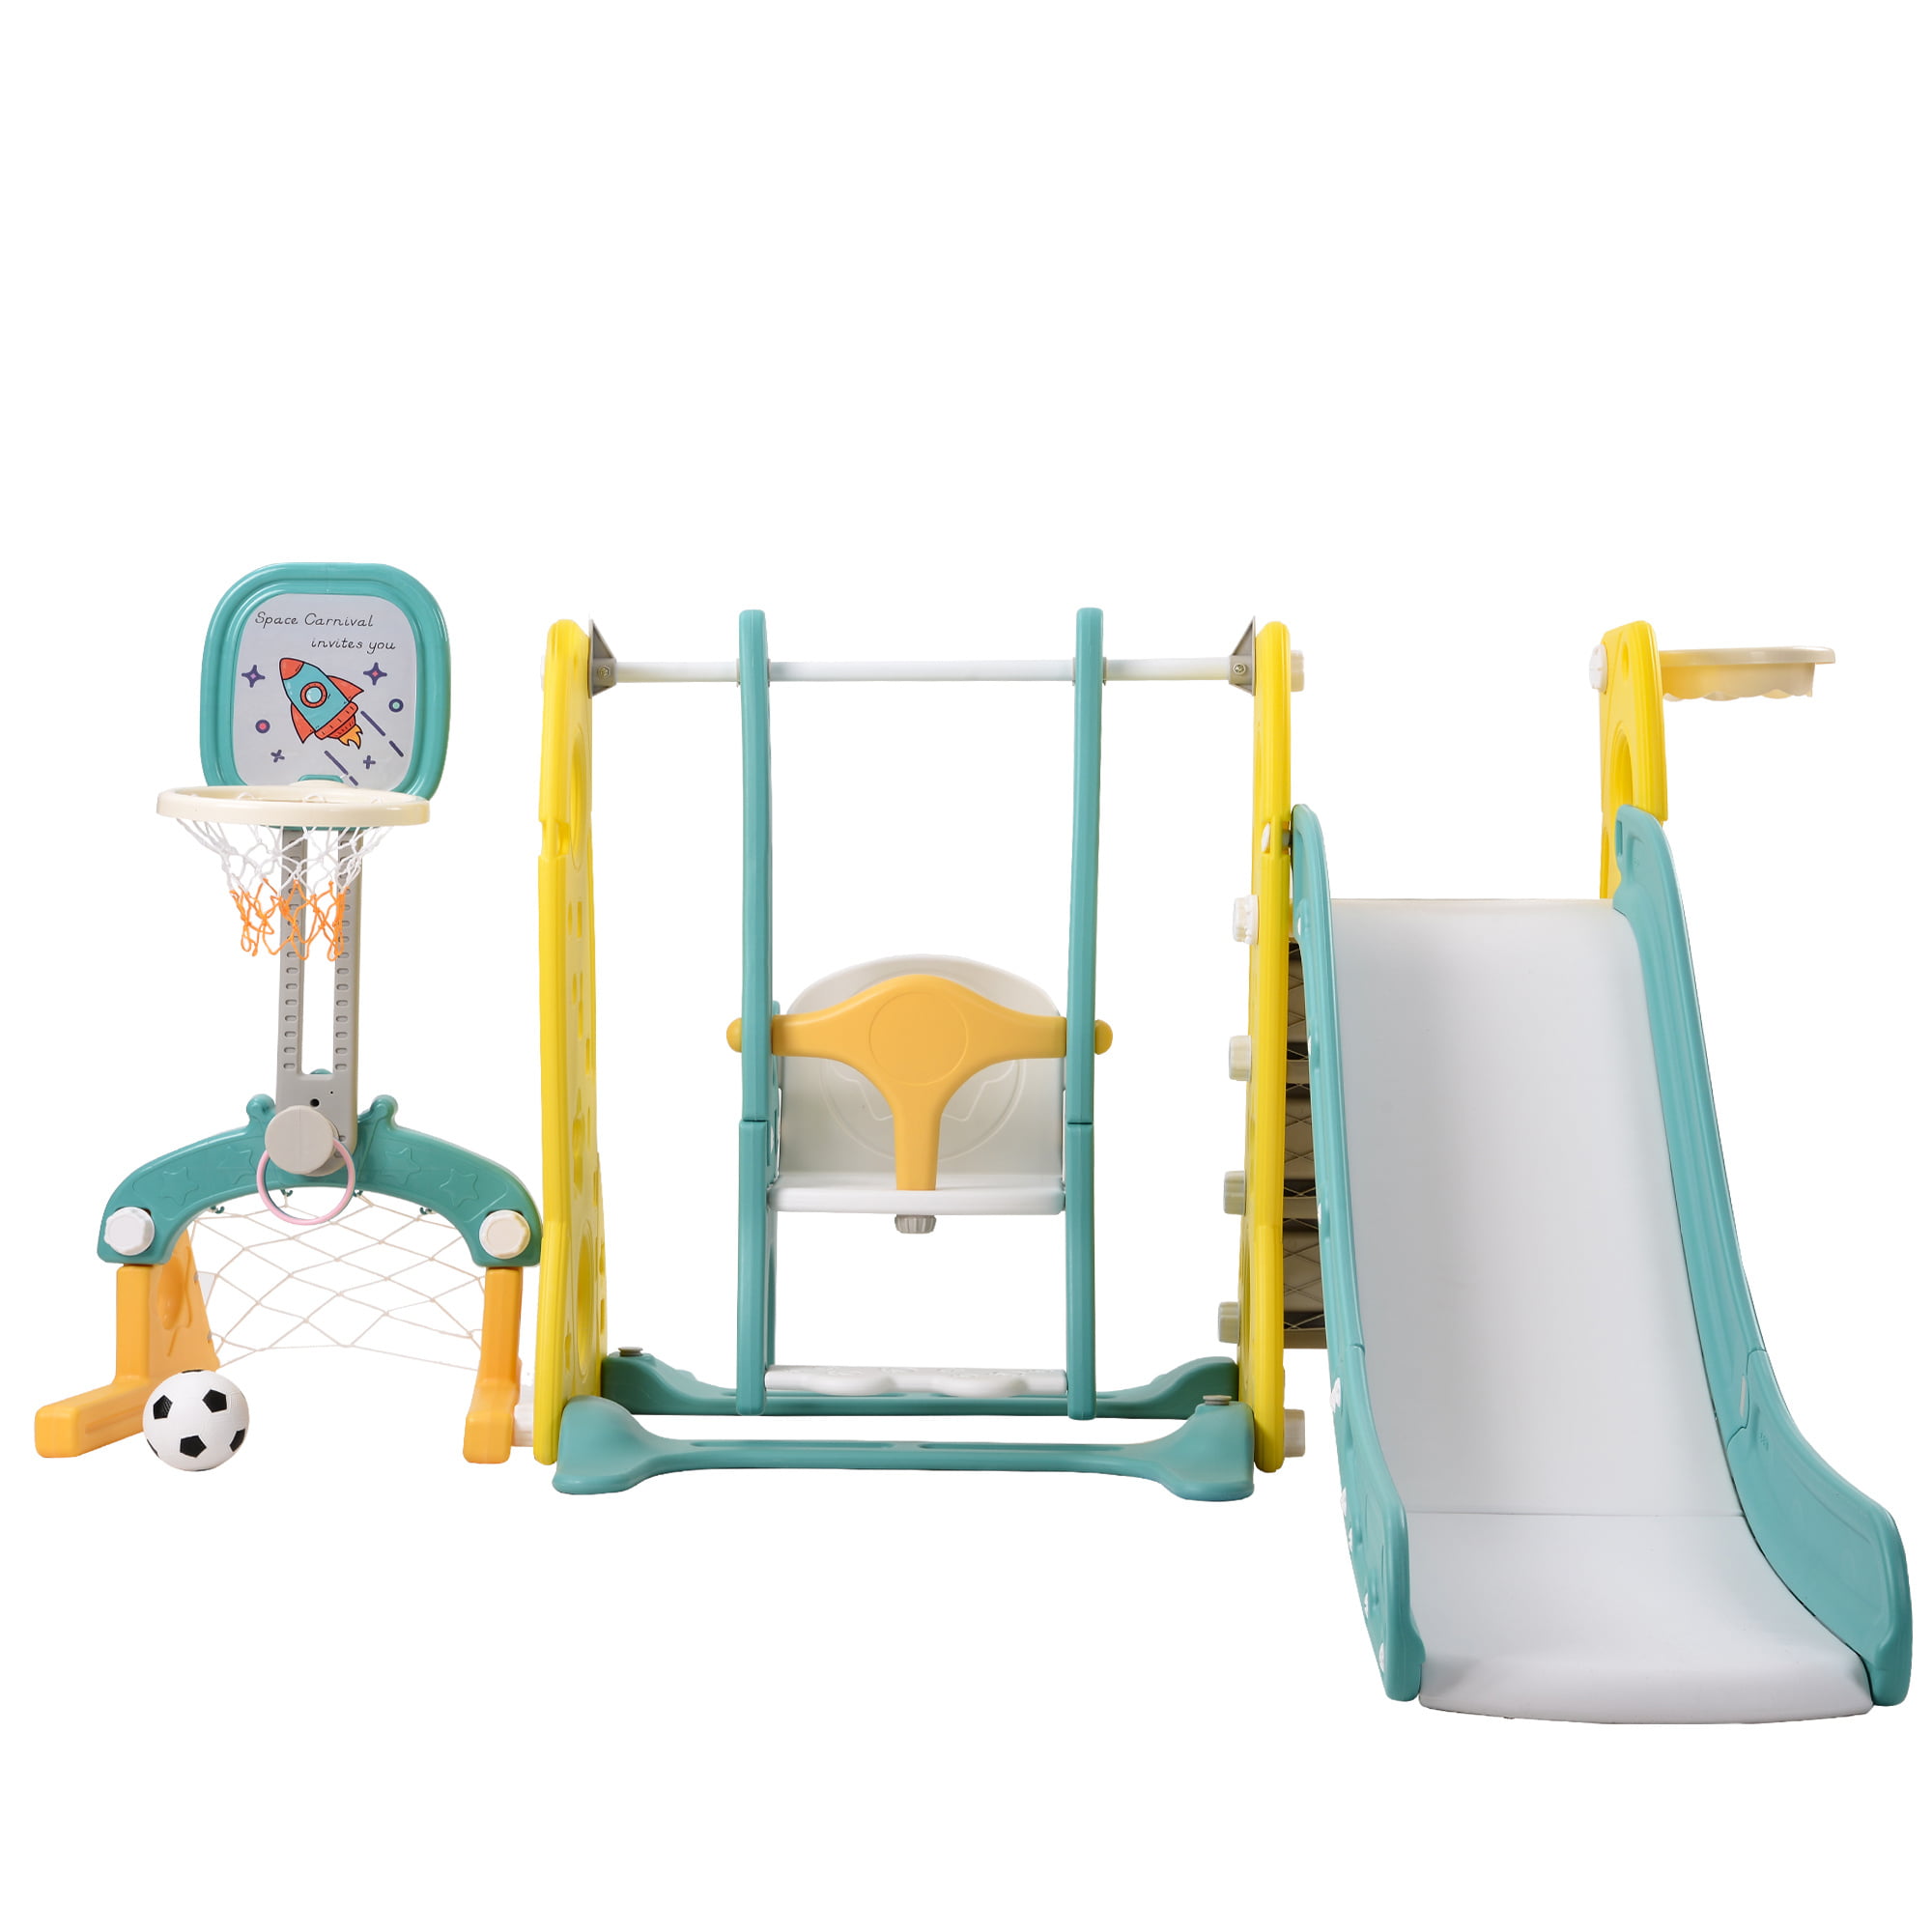 Details about   7 in 1 Kids Slide Swing Set Toddler Climber Indoor Playground Kids Outdoor ToyA6 